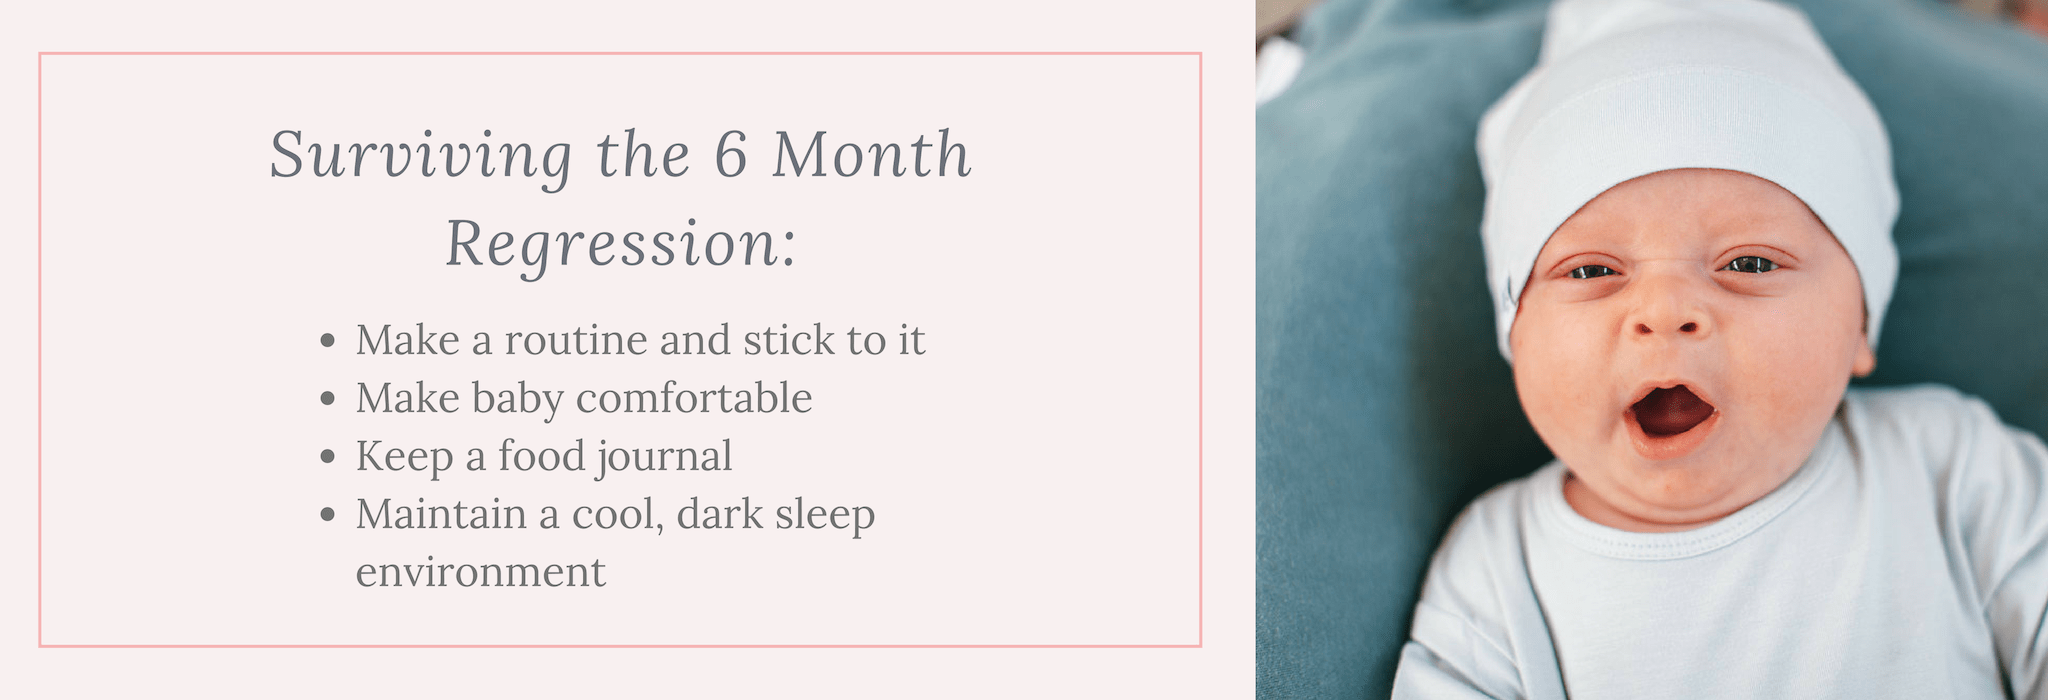 surviving-6-month-regression-tips